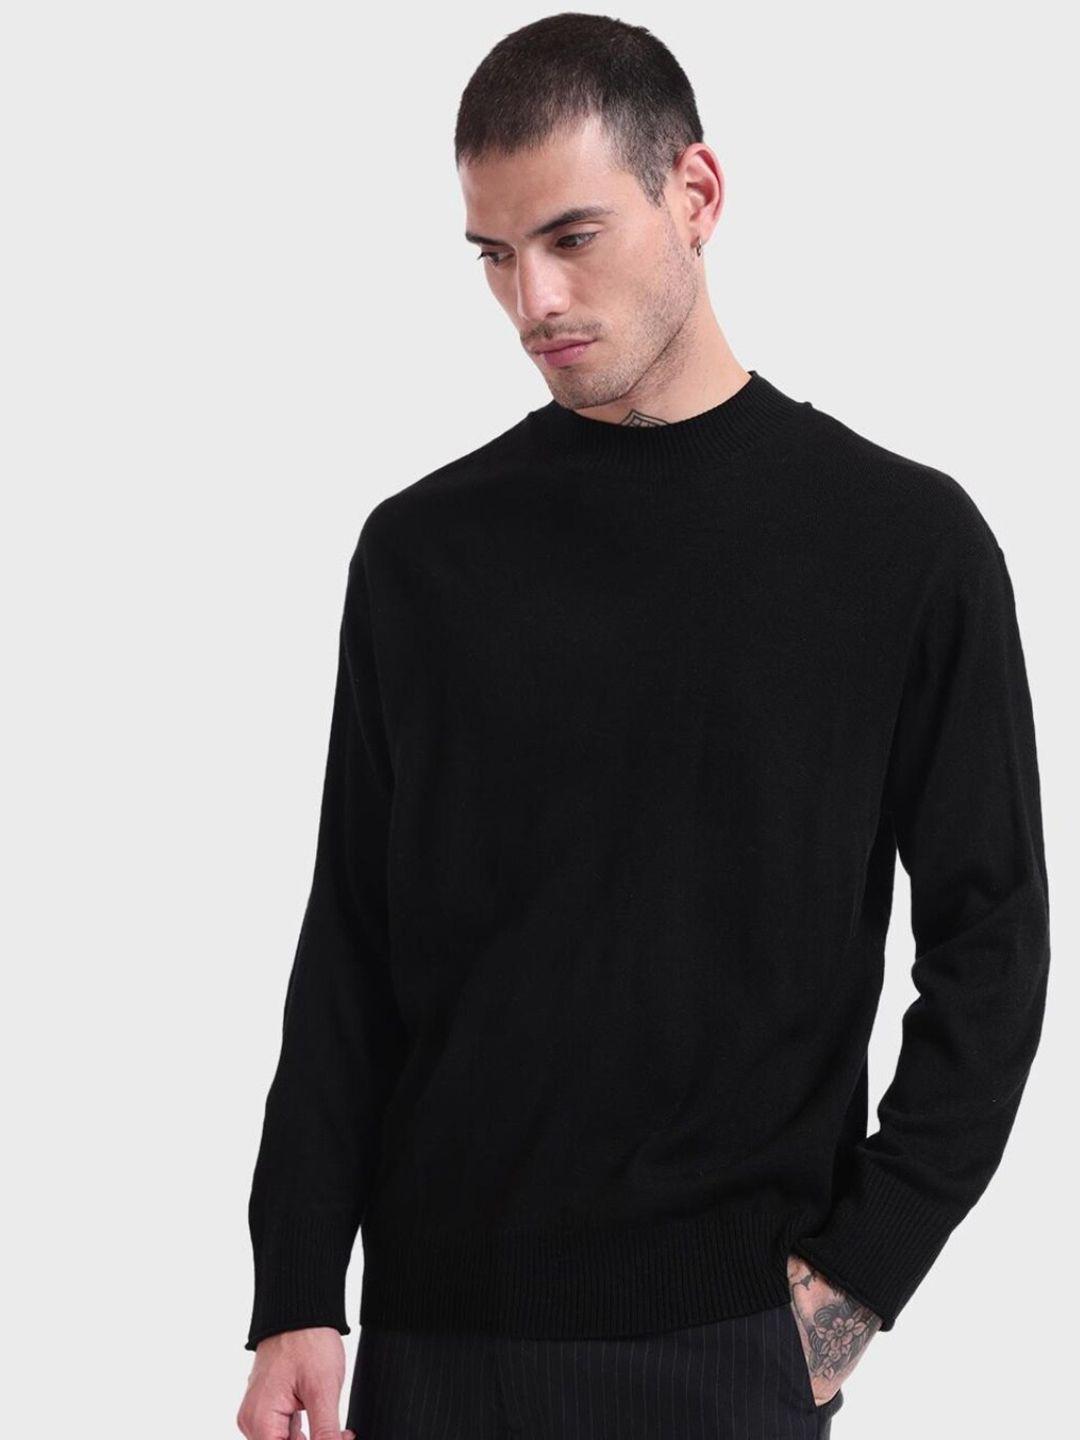 bewakoof-men-jet-black-oversized-sweater